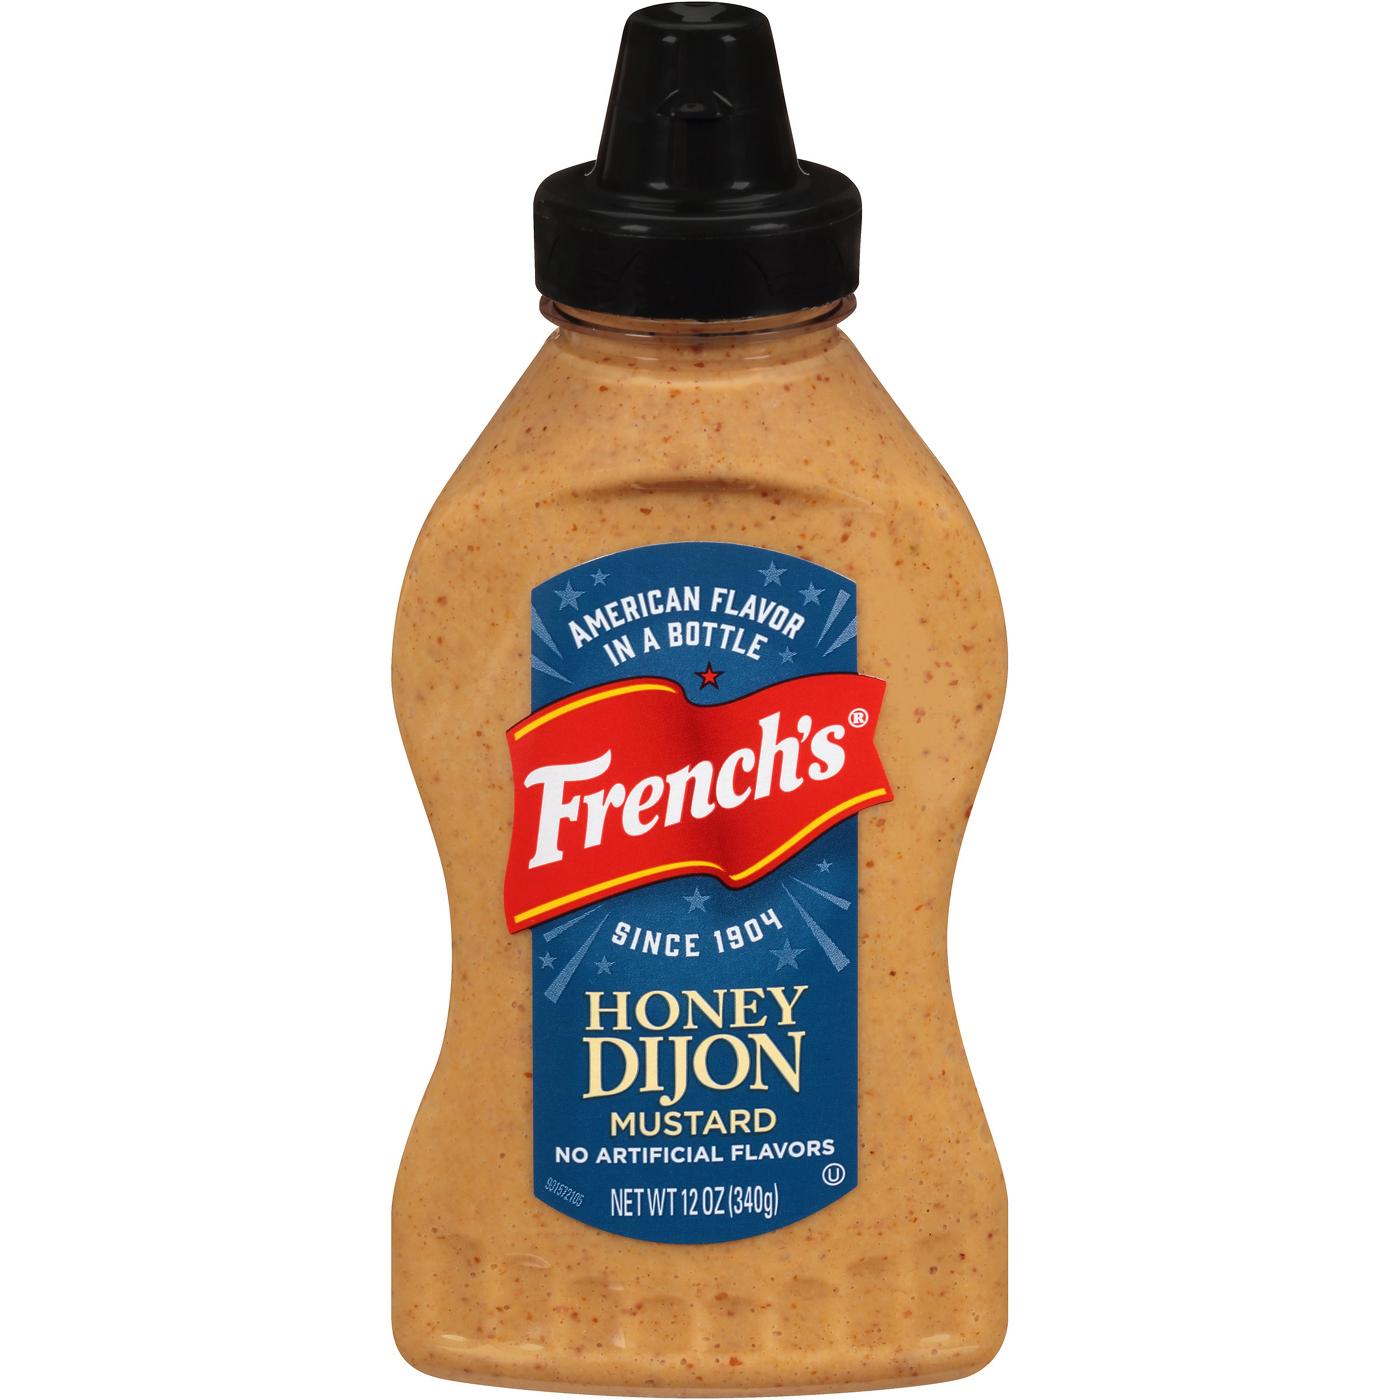 French's Honey Dijon Mustard; image 1 of 6